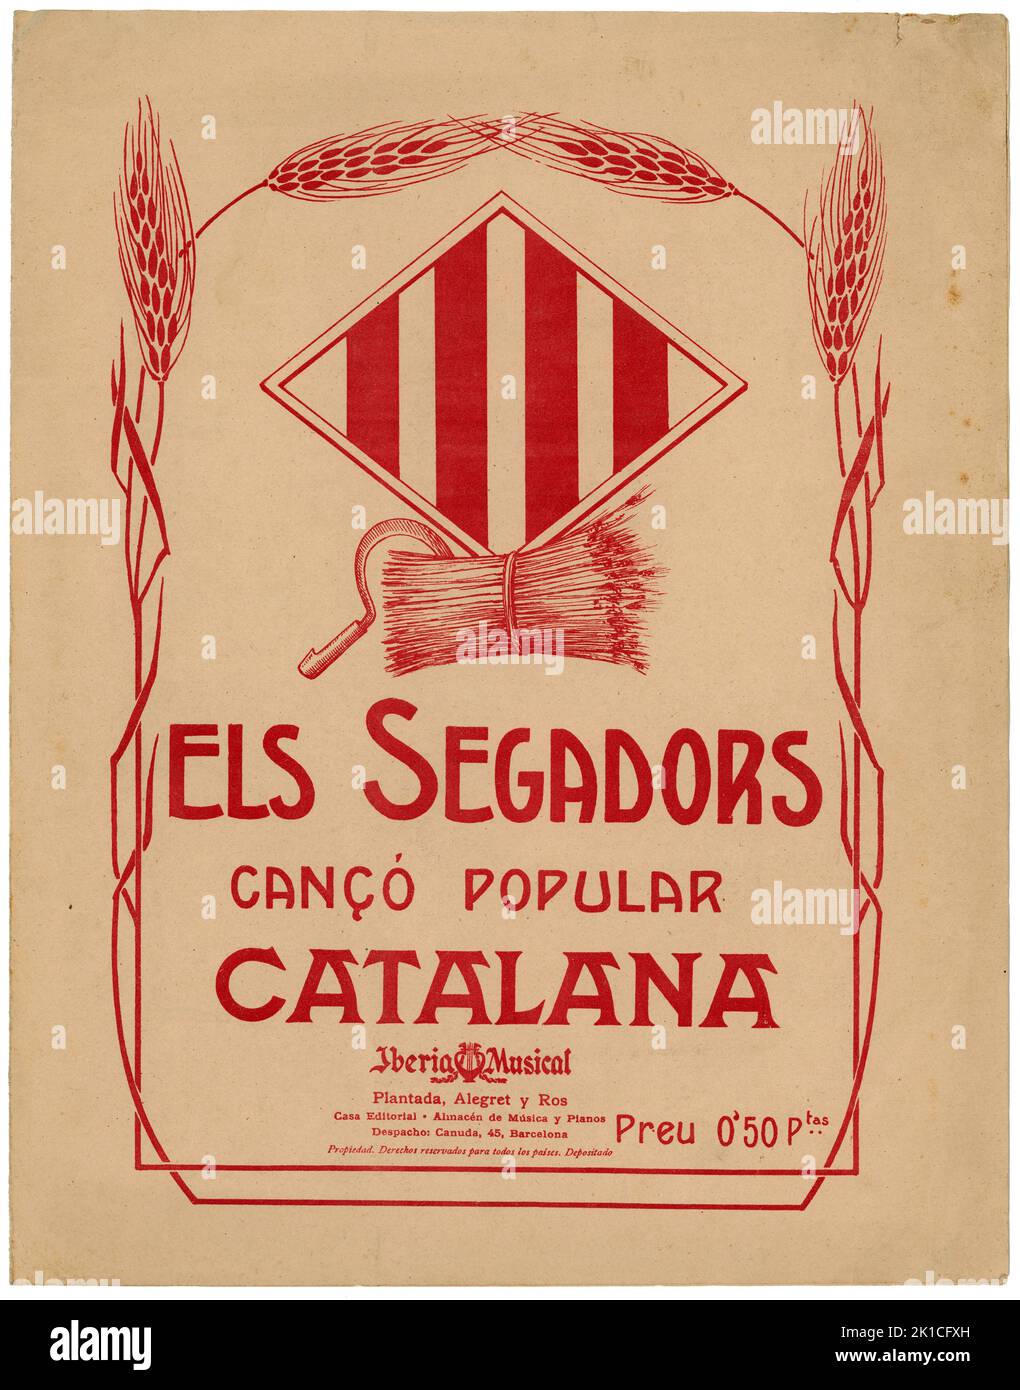 Partitura Musical del himno catalán Els Segadors. Barcelona, año 1930. Stockfoto